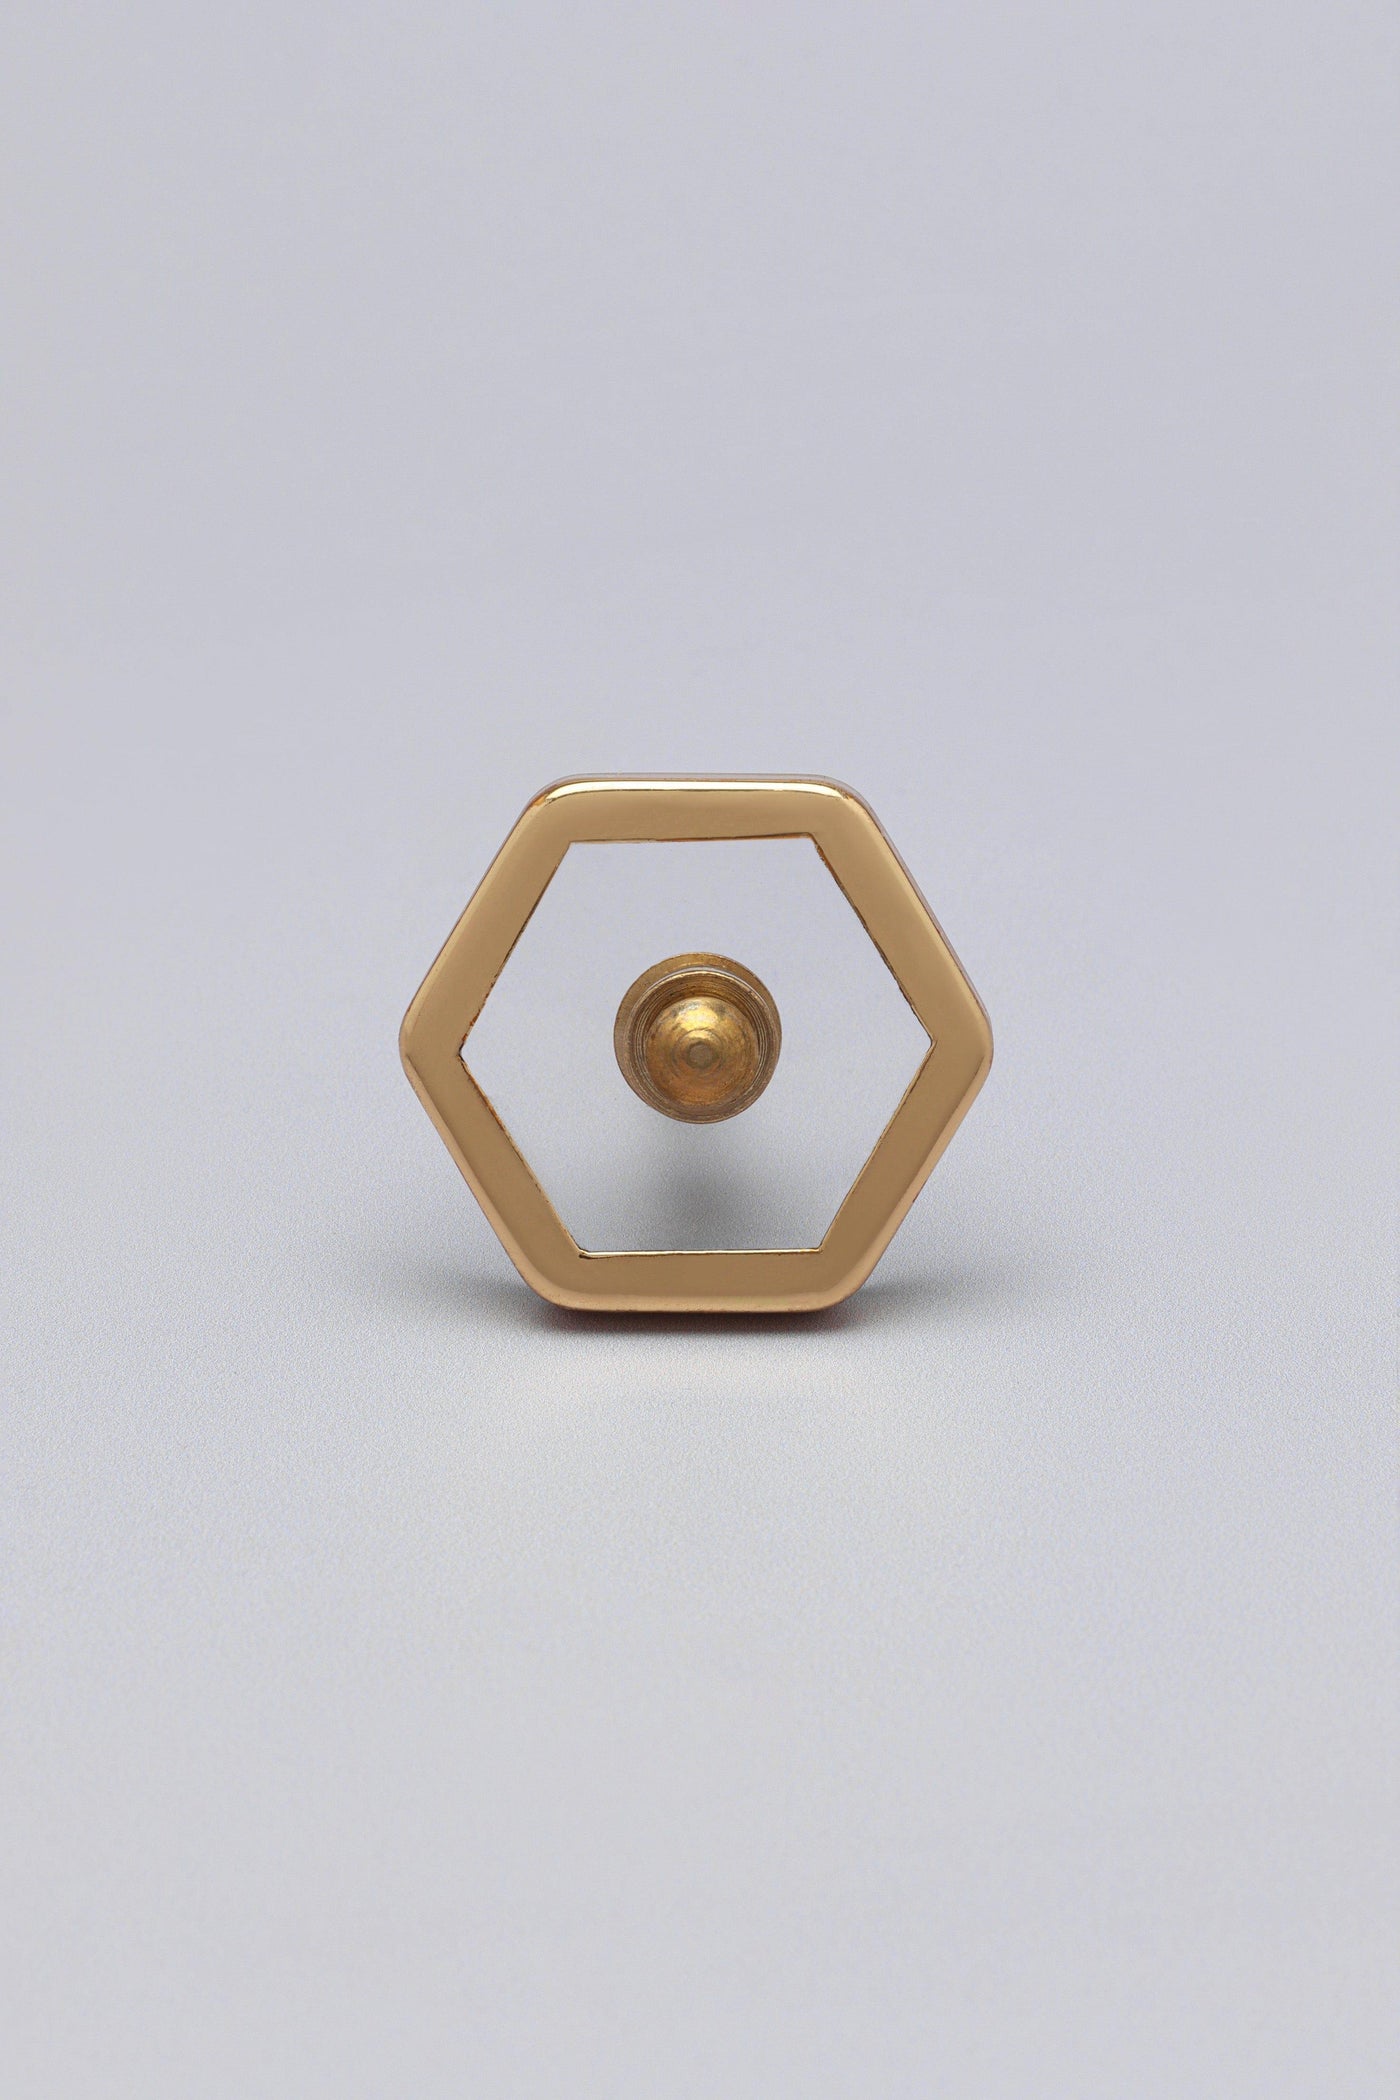 Gdecorstore Door Knobs & Handles Gold / Hexagon Elton Gold Brass Clear Glass Pull Knobs